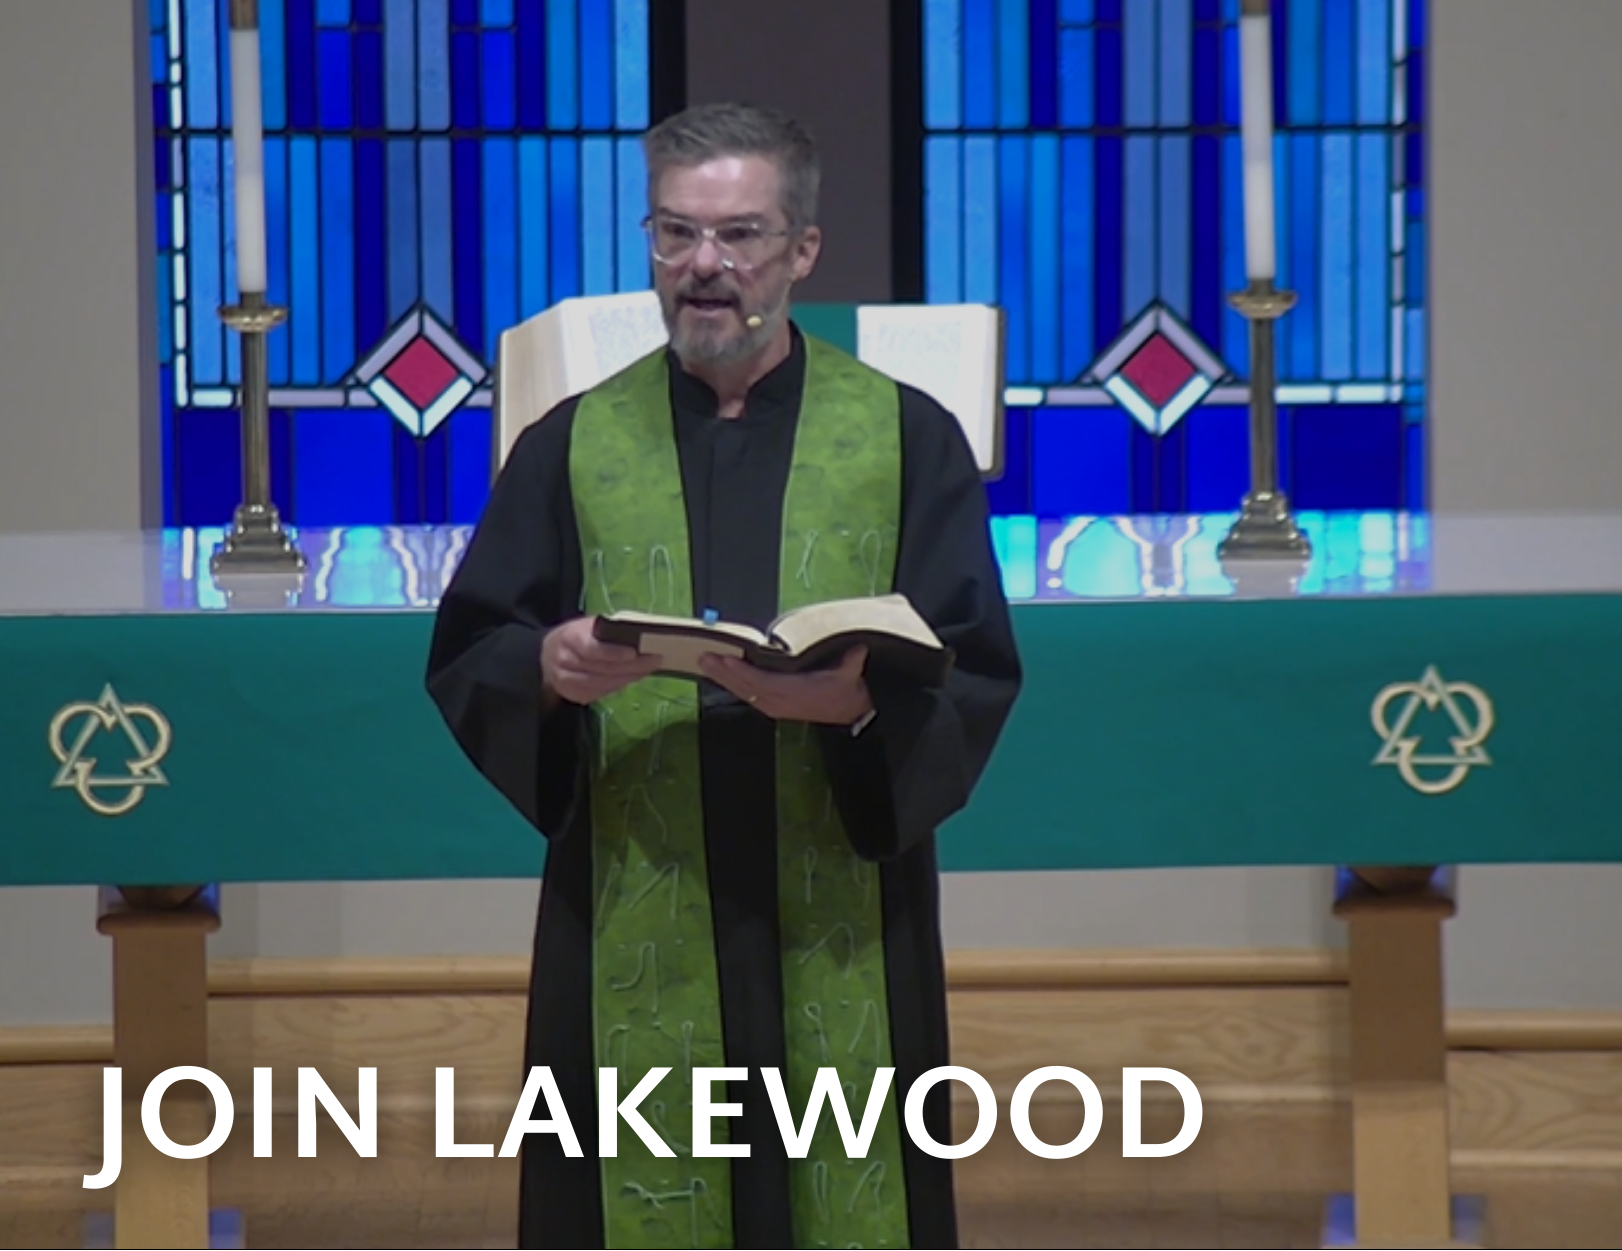 Lakewood Methodist Church